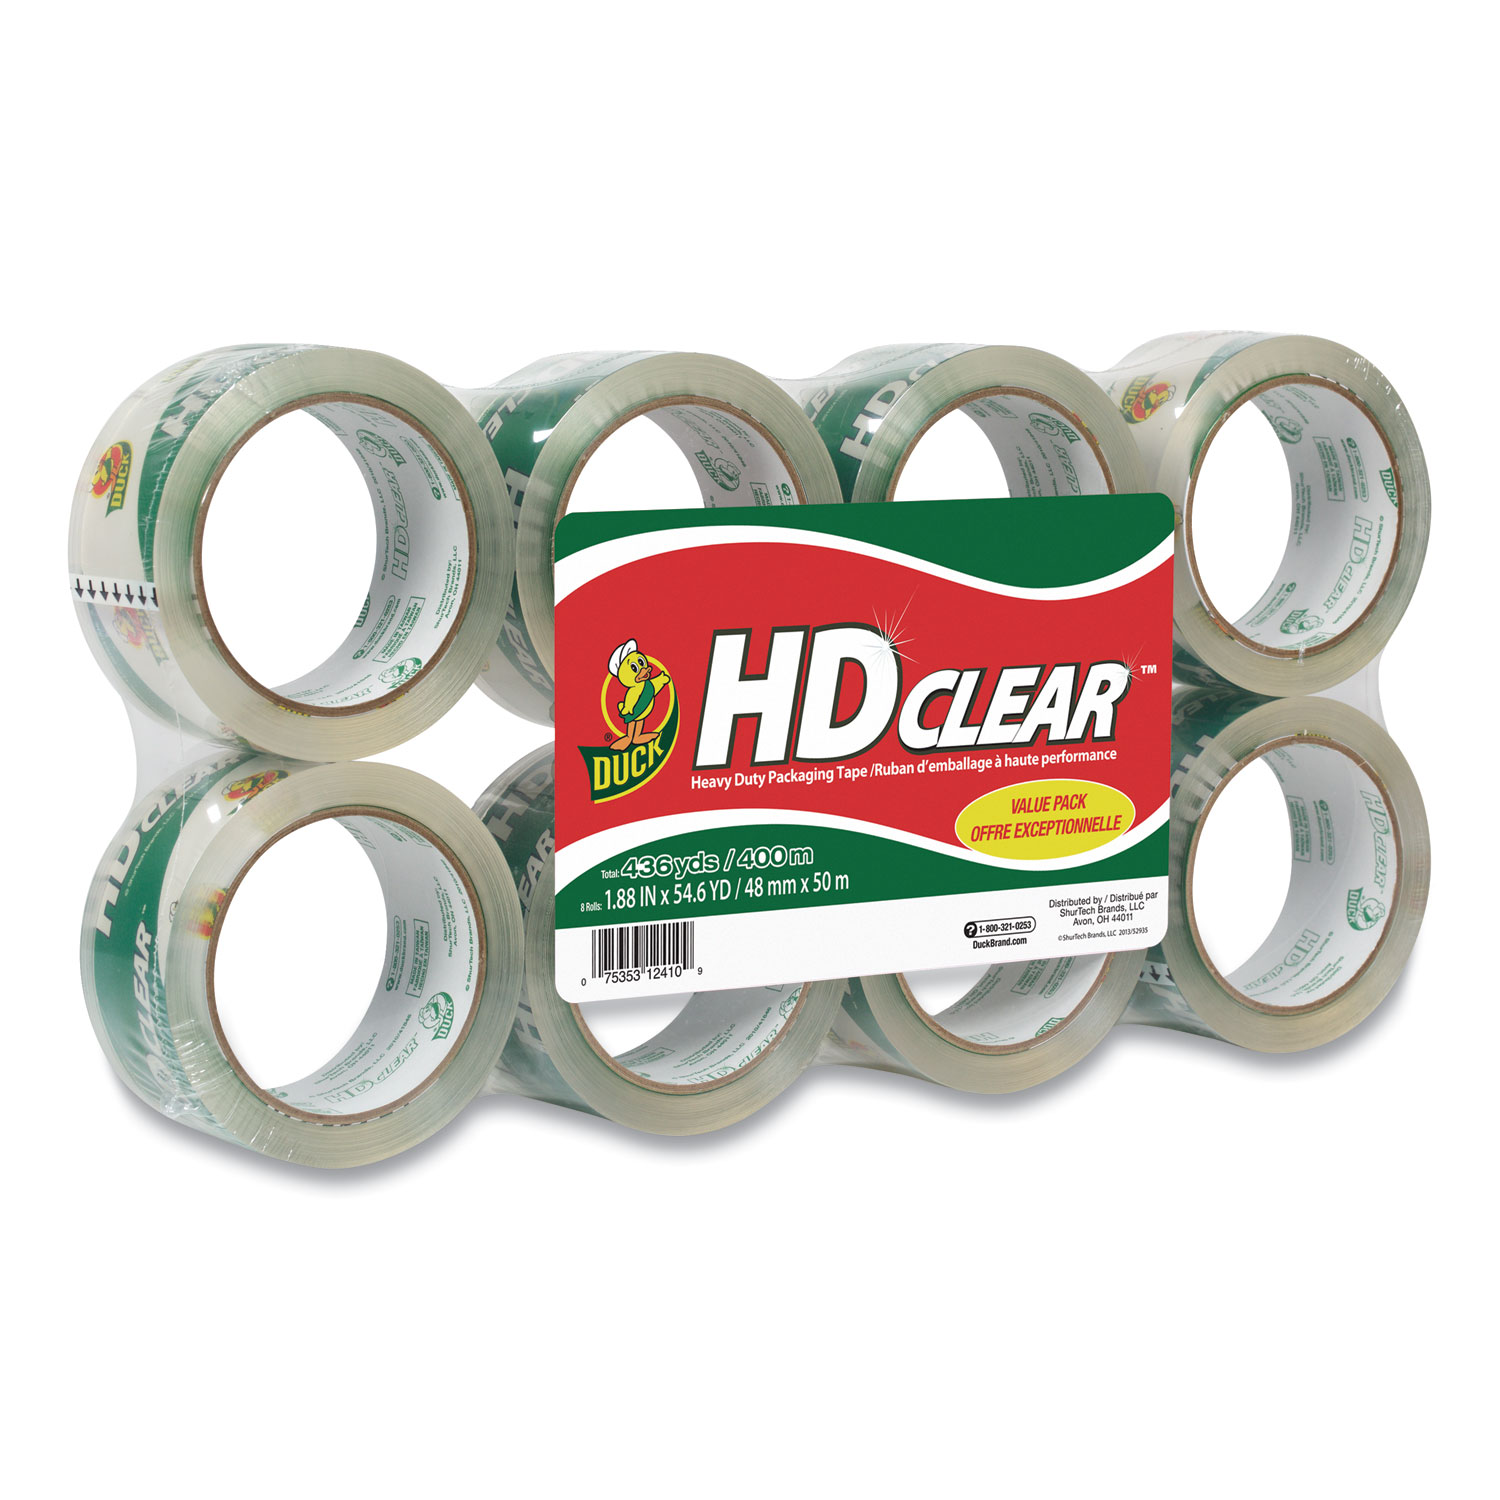  Duck 282195 Heavy-Duty Carton Packaging Tape, 3 Core, 1.88 x 55 yds, Clear, 8/Pack (DUC282195) 